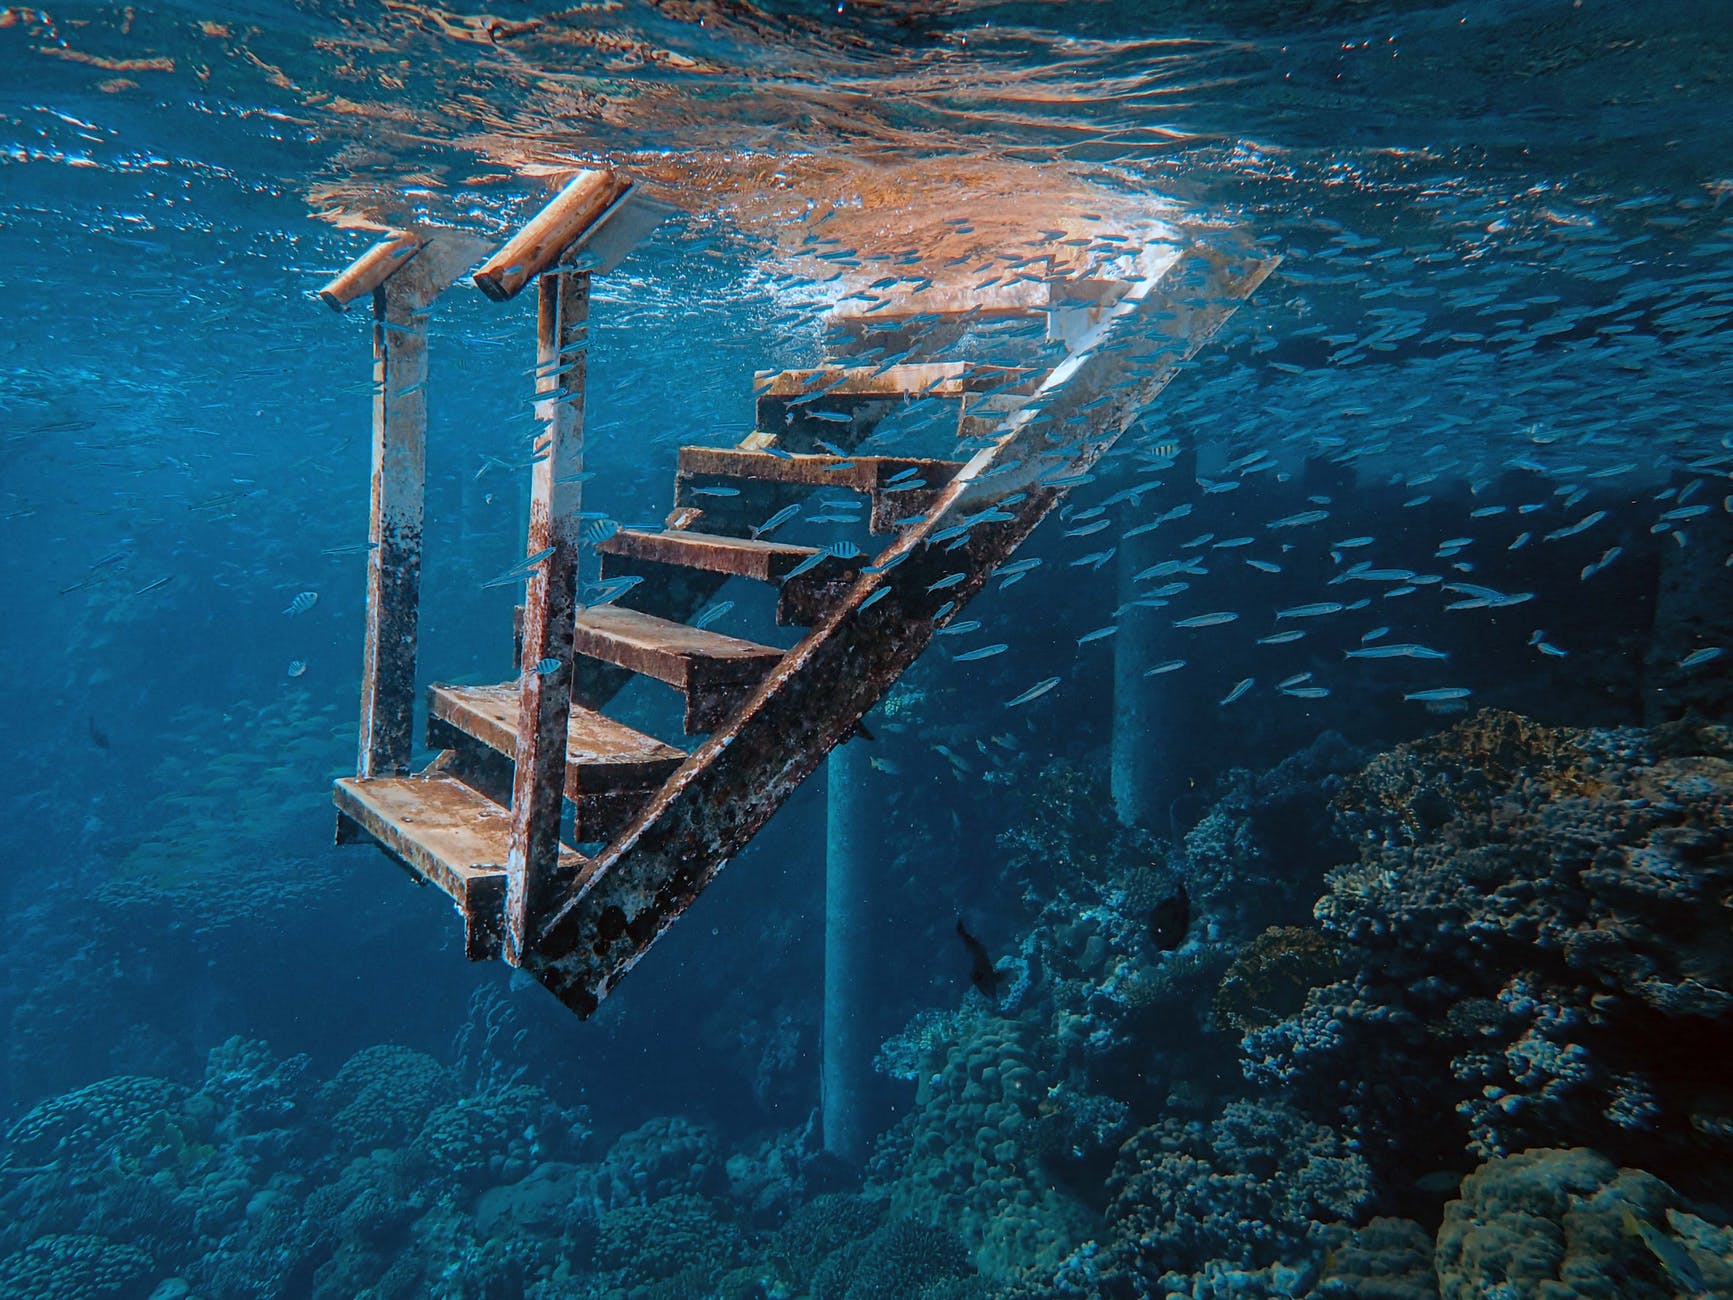 Underwater flight of stairs